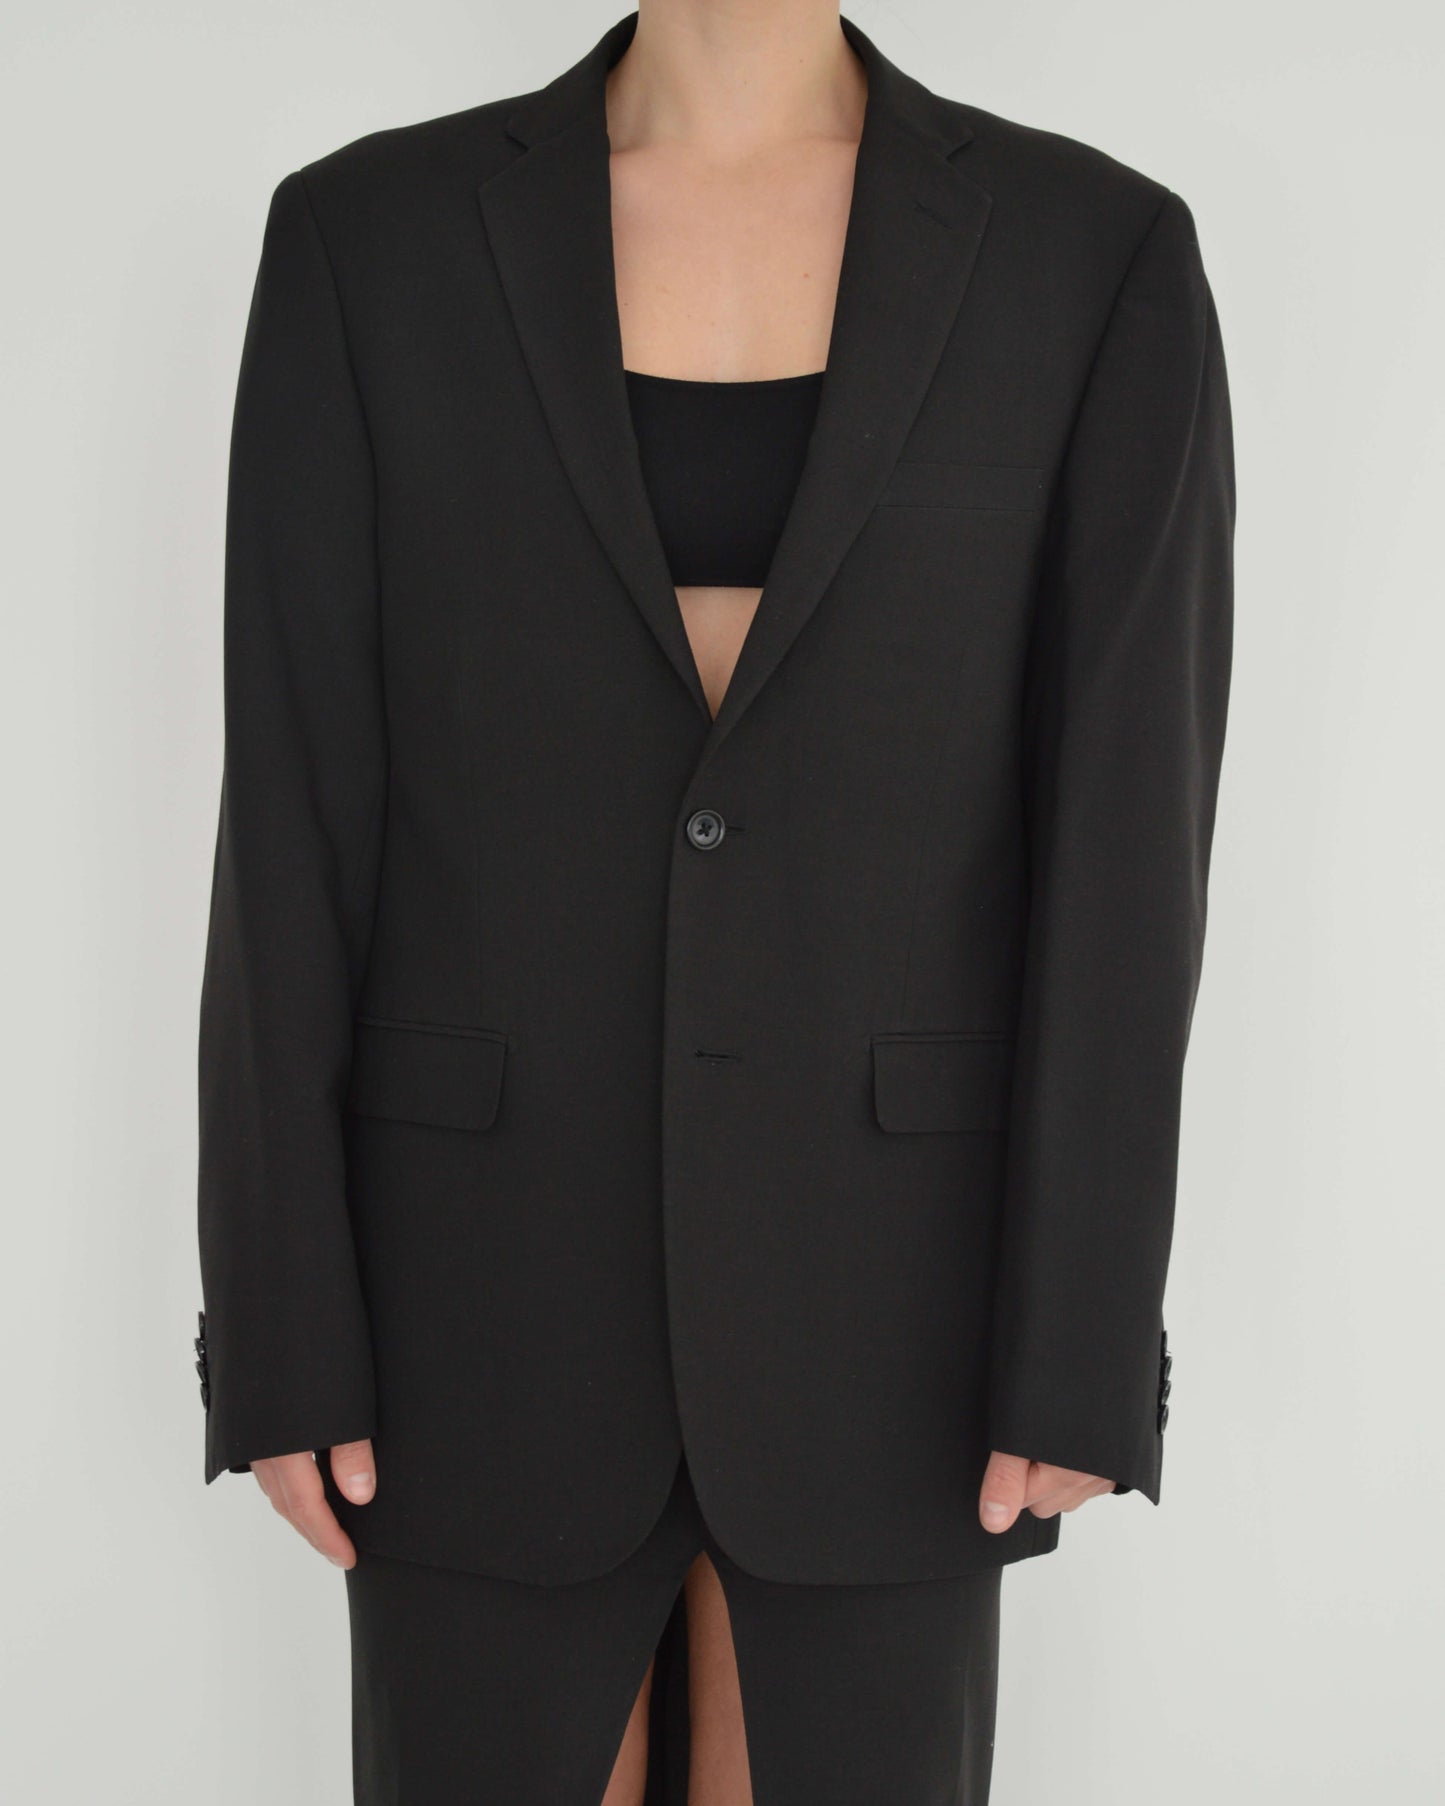 Vegan Skirt Suit - Pitch Black (XS/S)